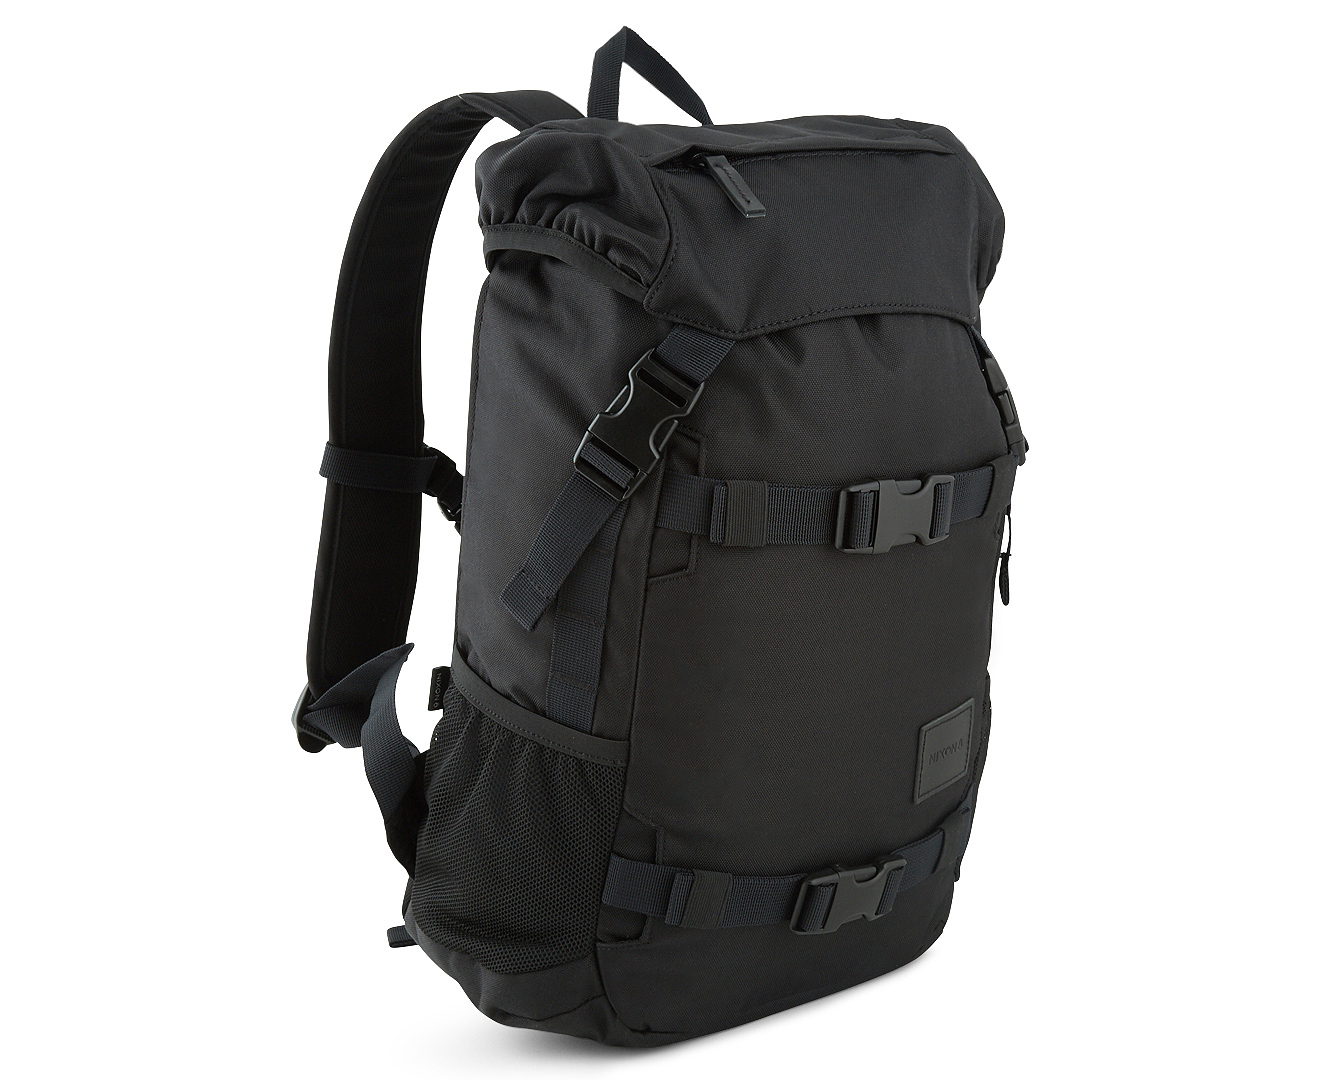 Nixon Small Landlock Backpack - All Black | Catch.com.au